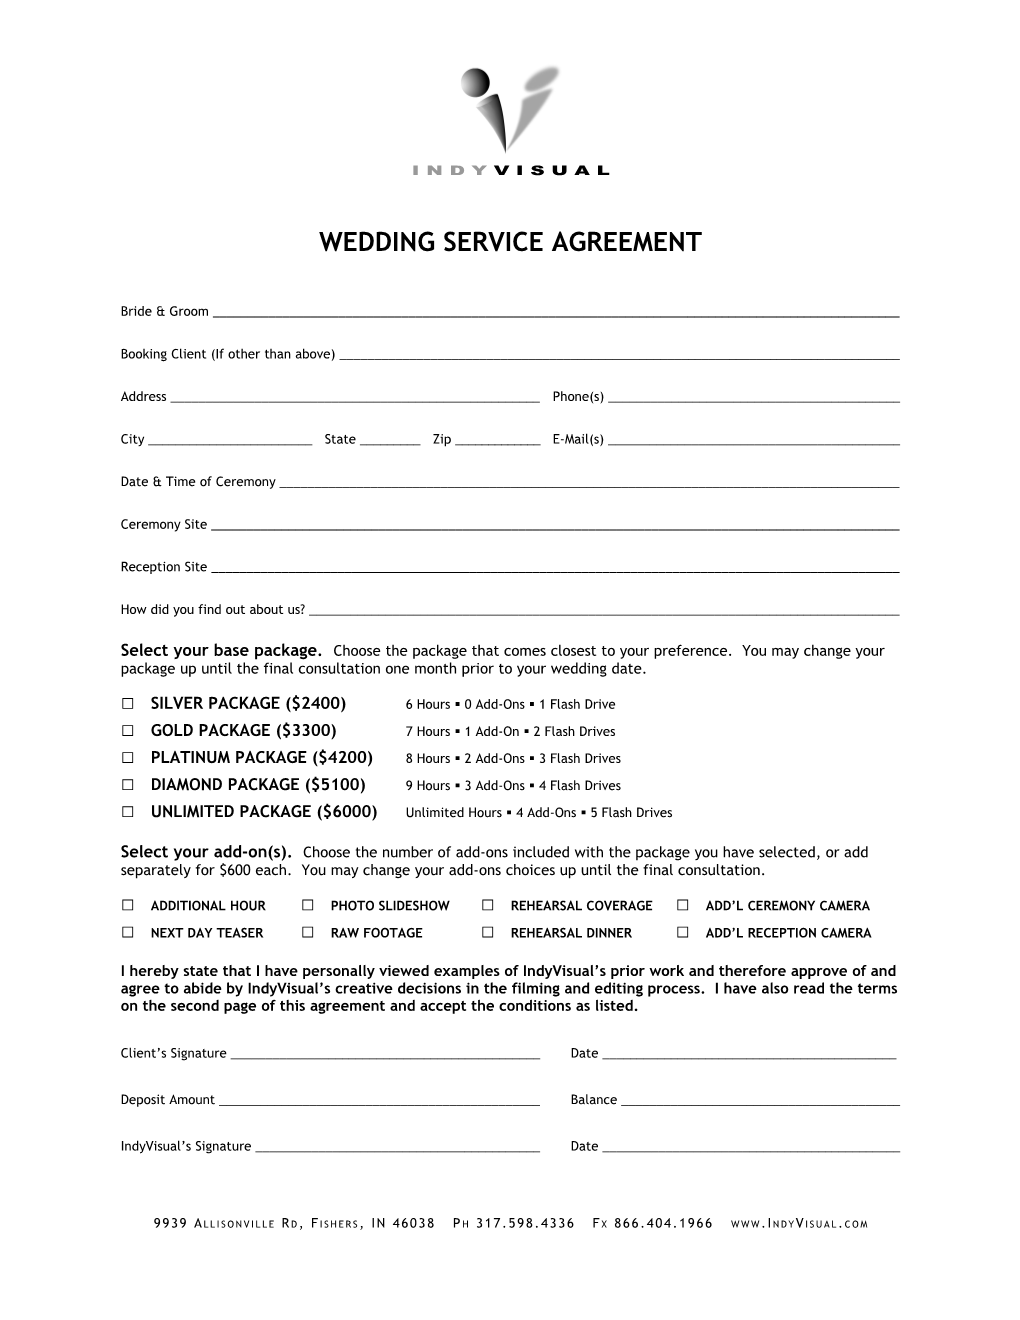 Wedding Service Agreement